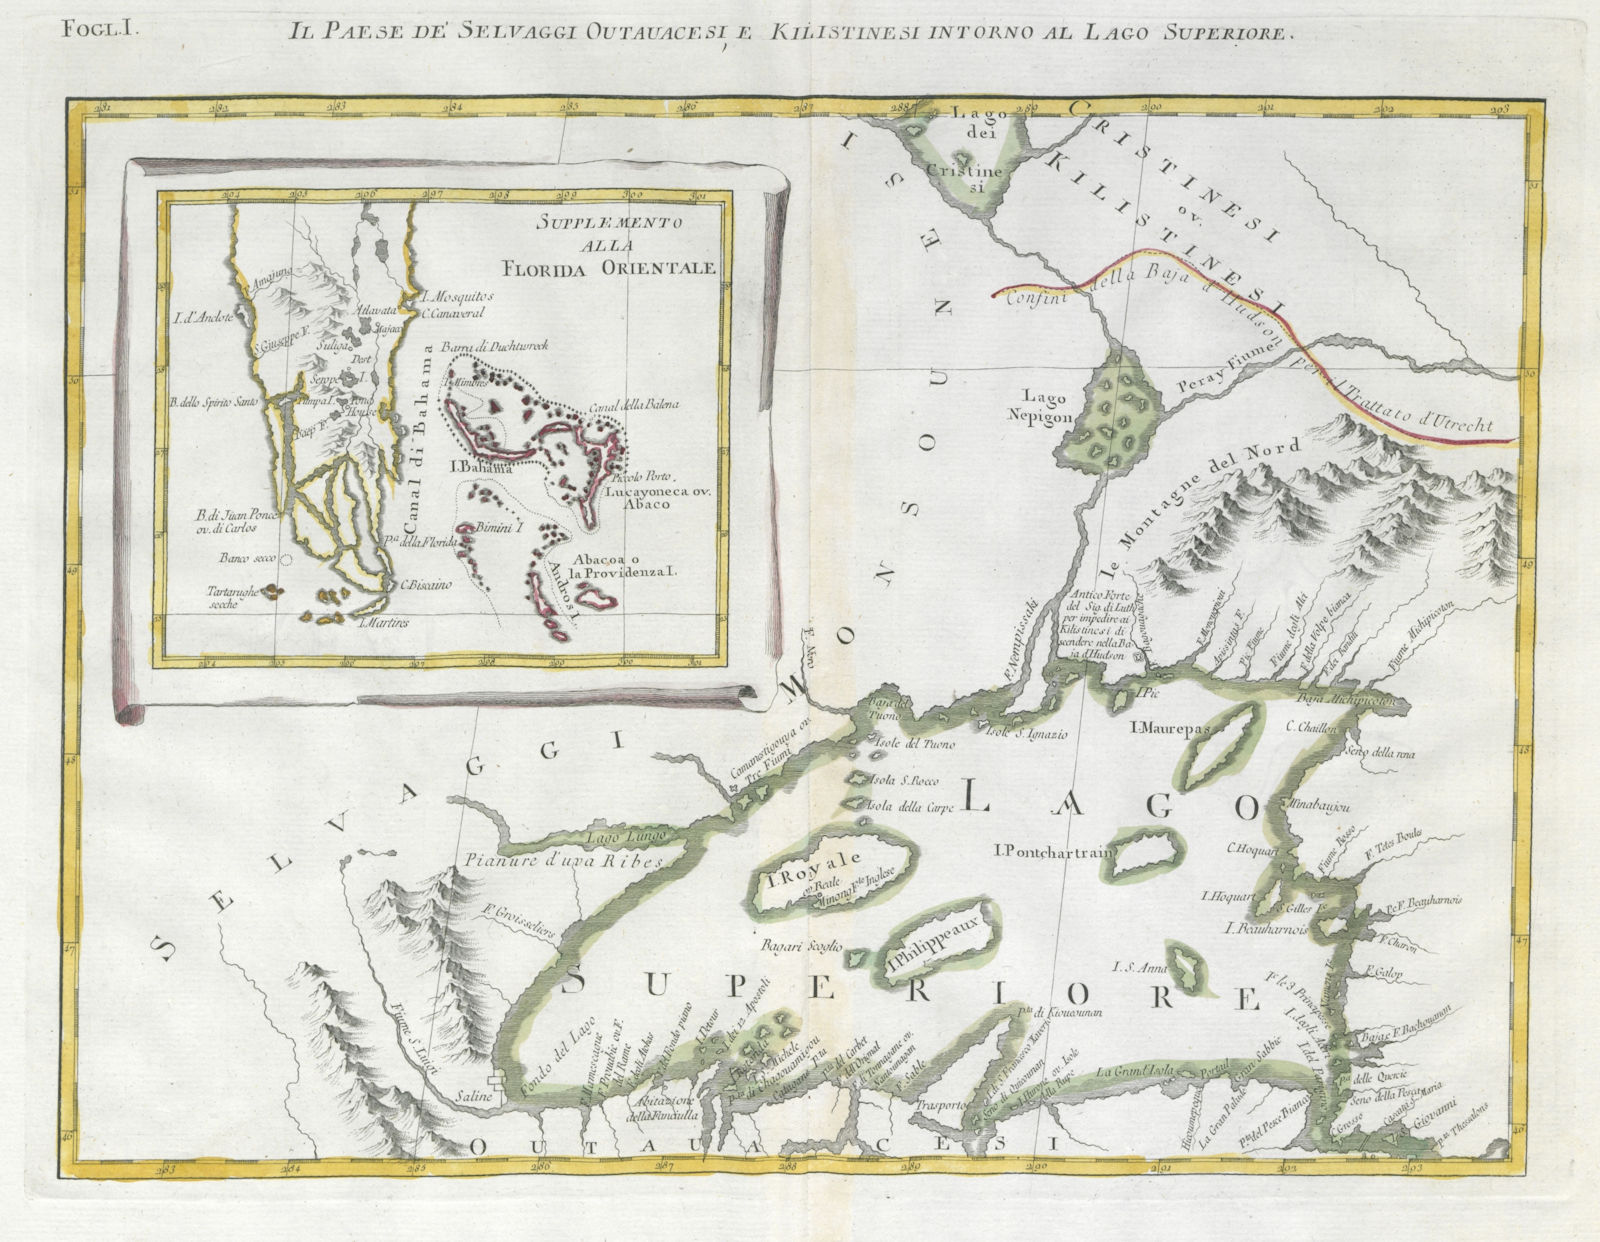 "Il Paese de'Selvaggi Outauacesi…" Lake Superior Florida Bahamas. ZATTA 1779 map